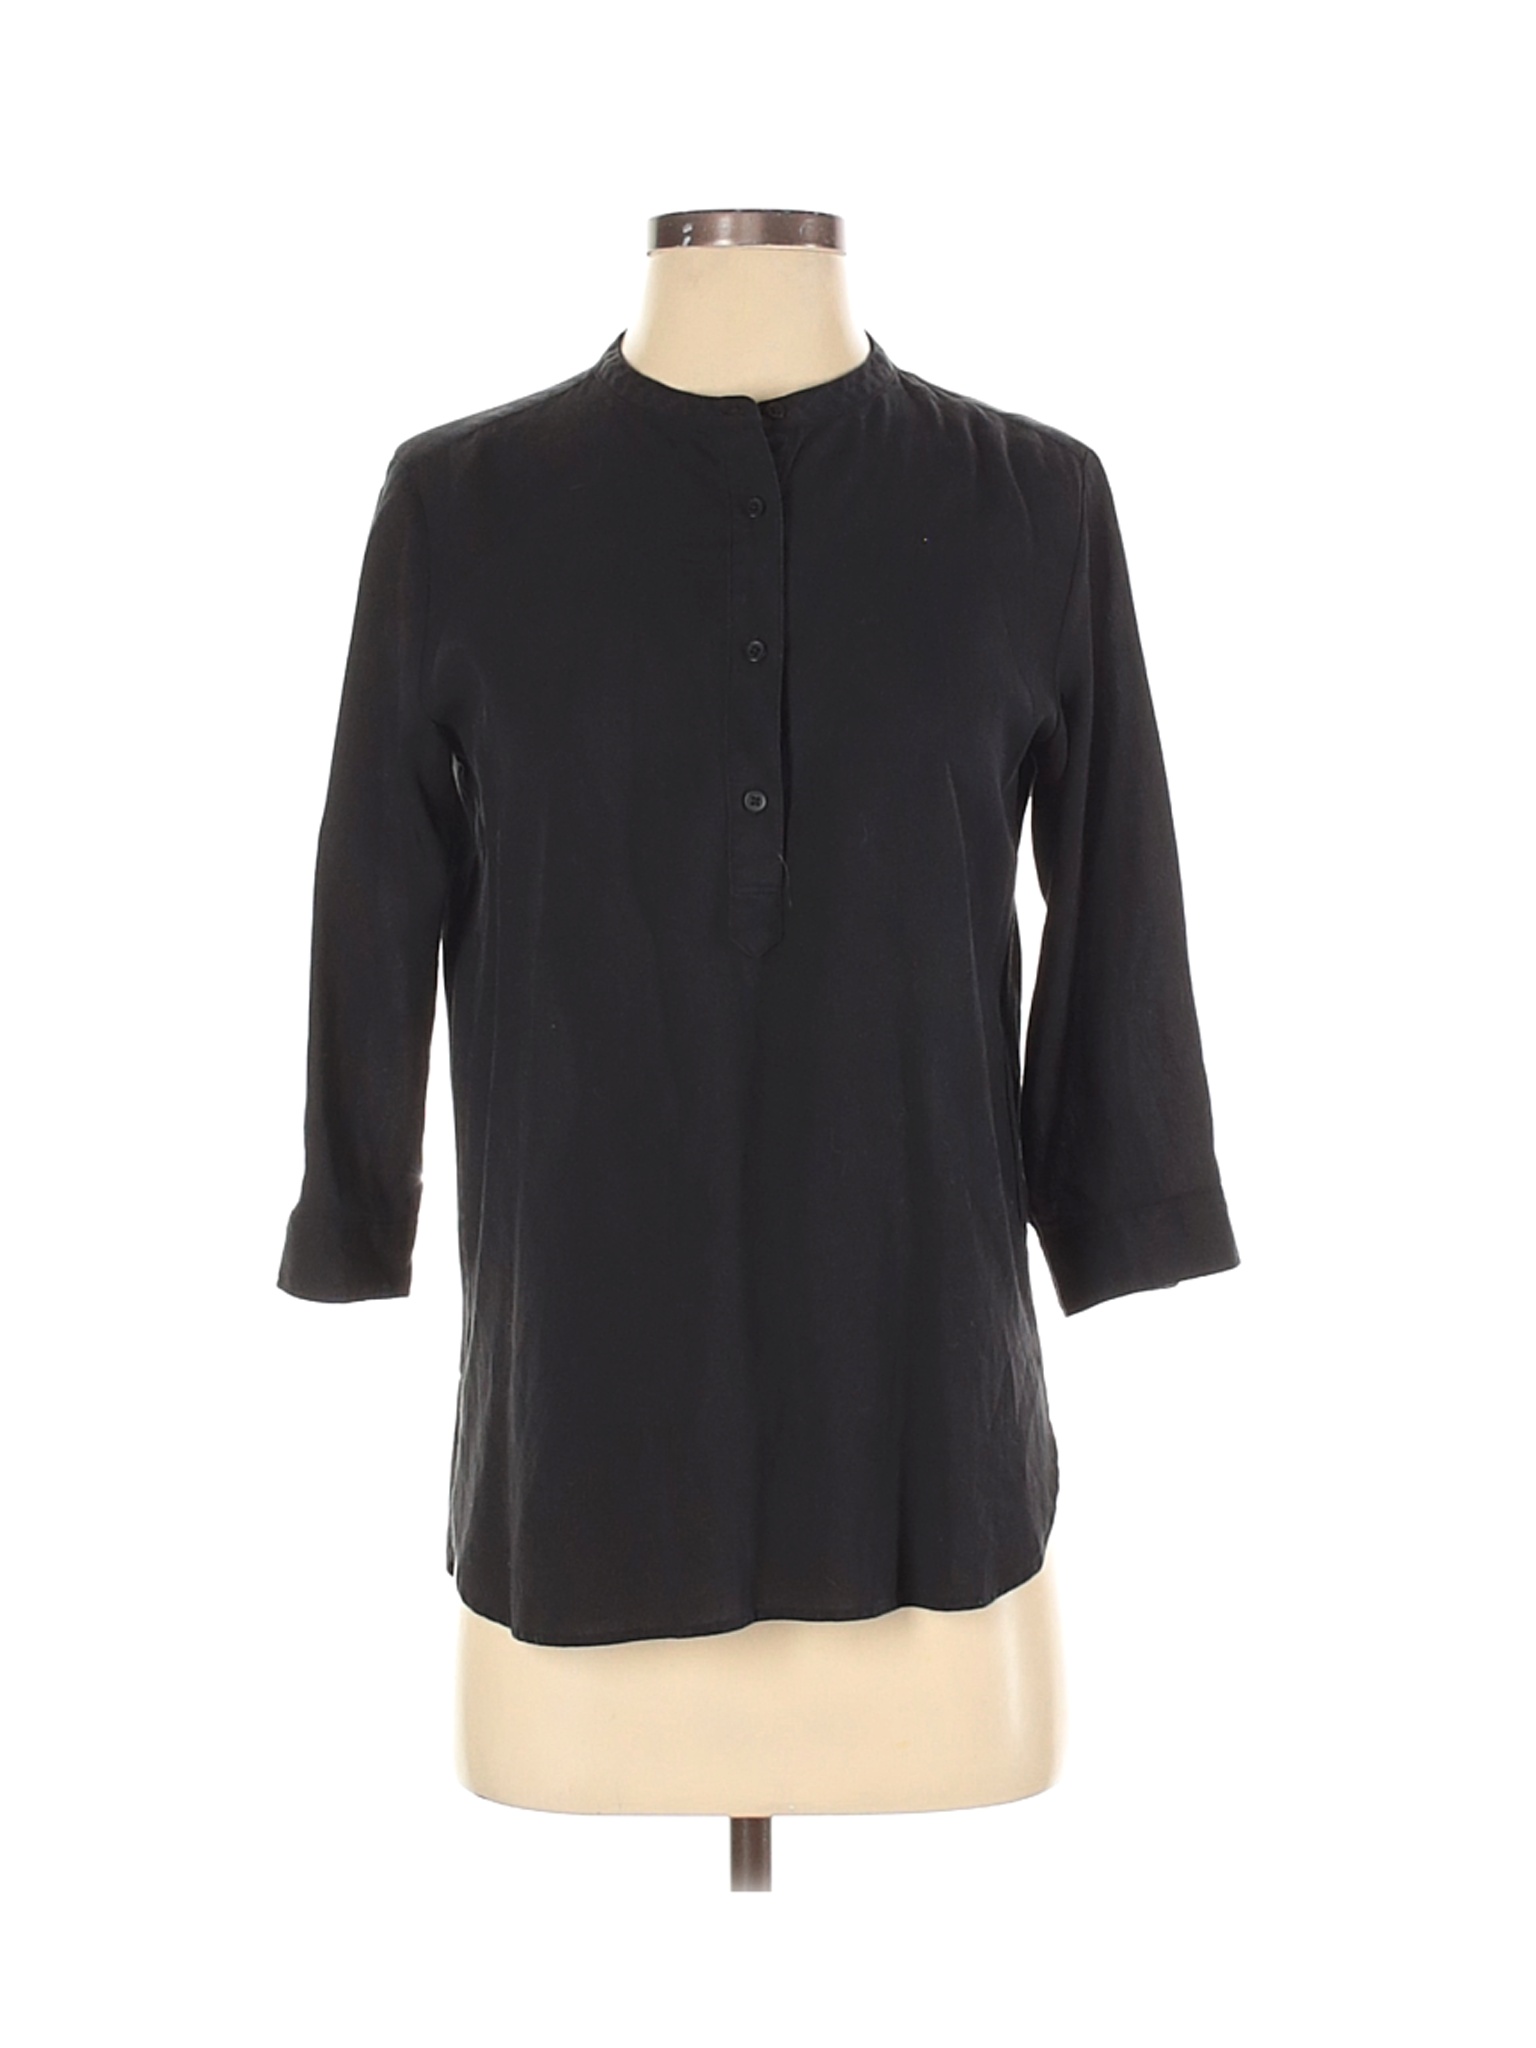 Uniqlo Women Black 3/4 Sleeve Blouse S | eBay